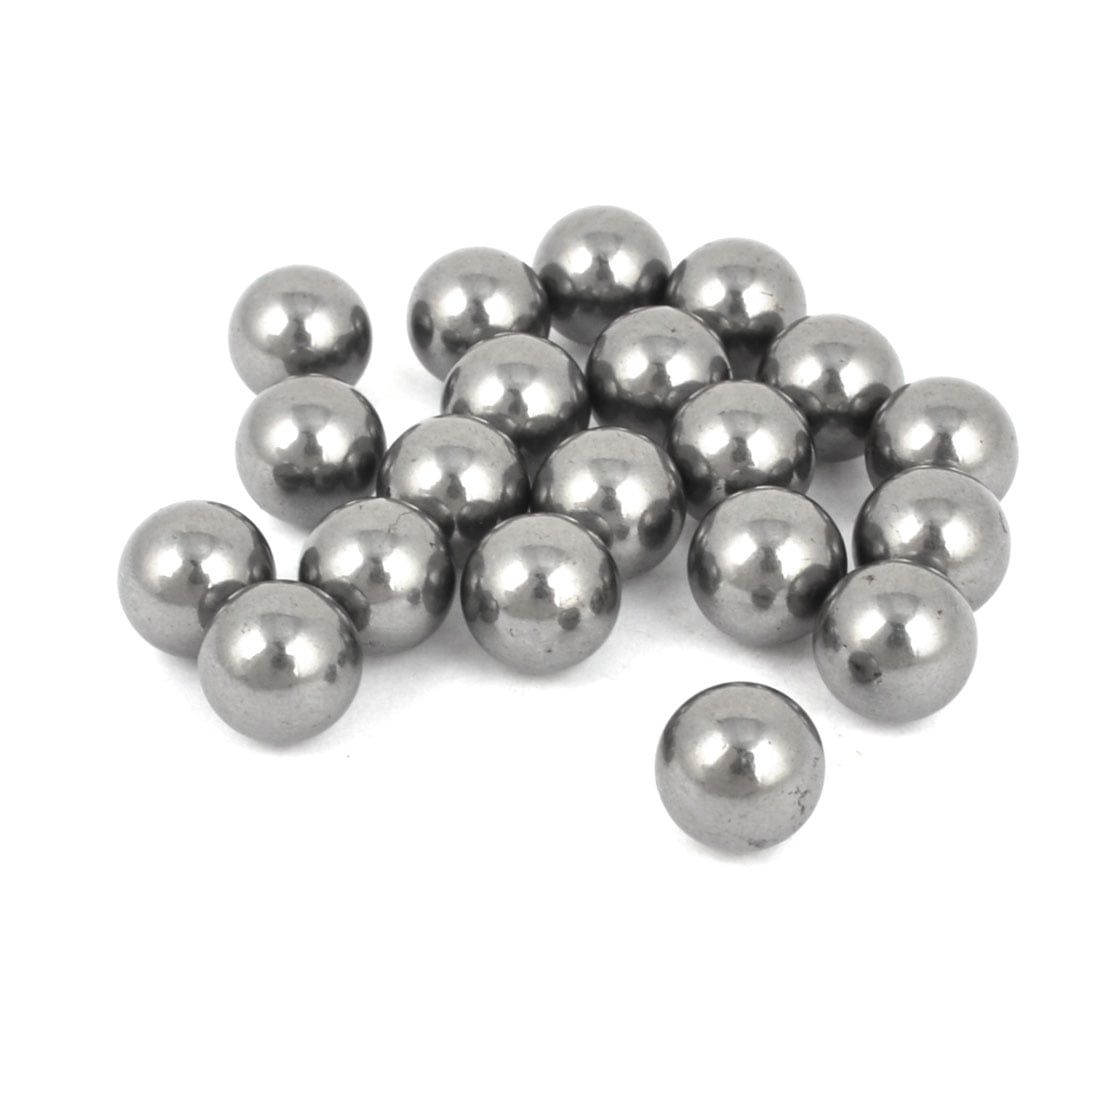 500 9.5mm steel ball bearings 